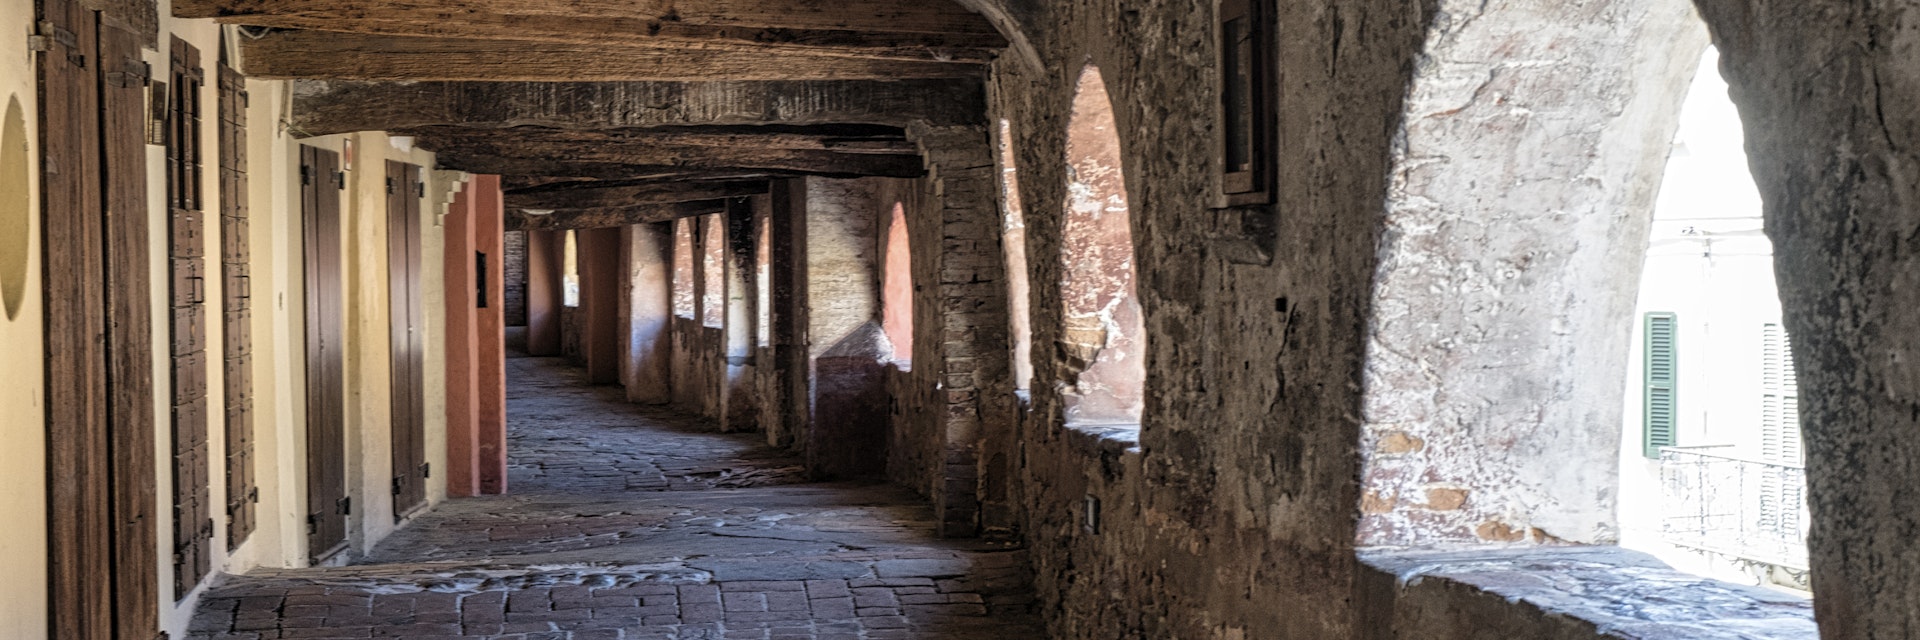 Brisighella (Ravenna, Emilia Romagna, Italy): the famous covered street known as via degli Asini or via del Borgo